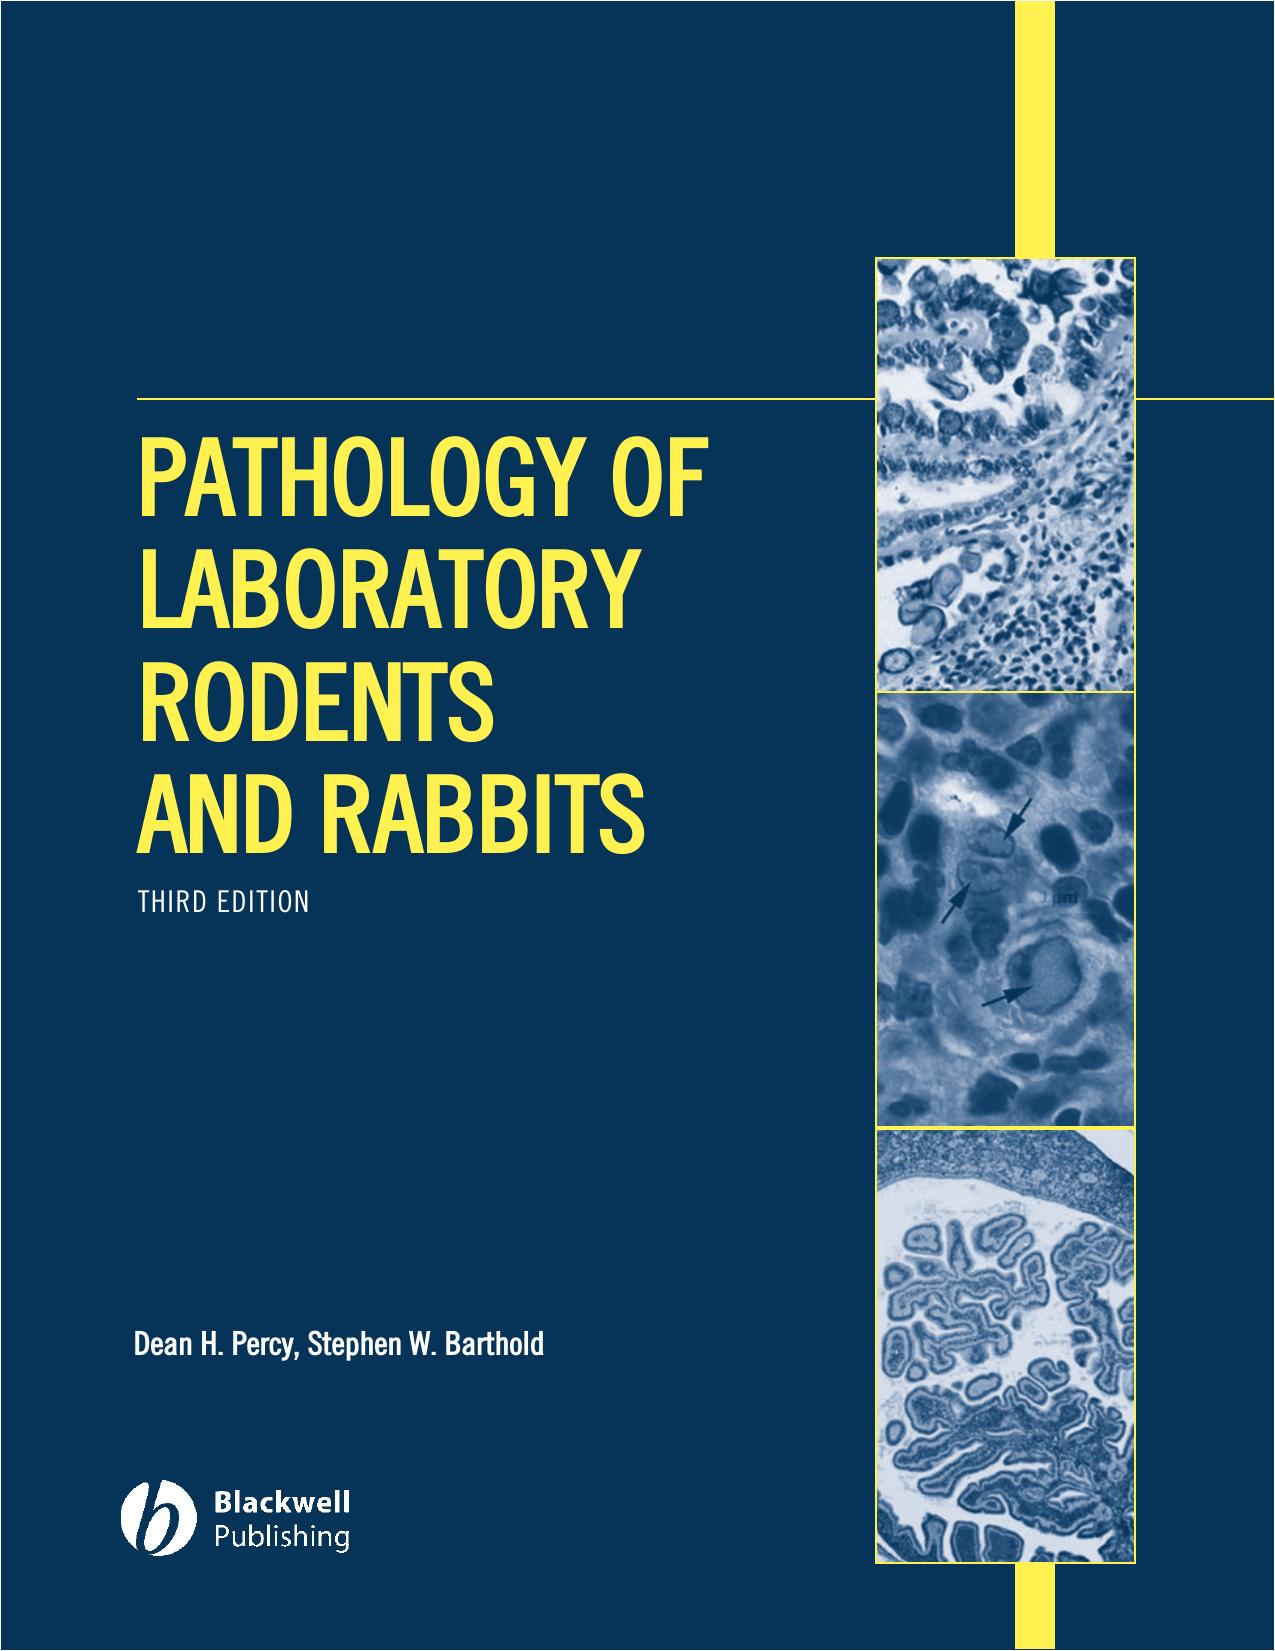 Pathology of laboratory rodents and rabbits, 3rd Ed 2007